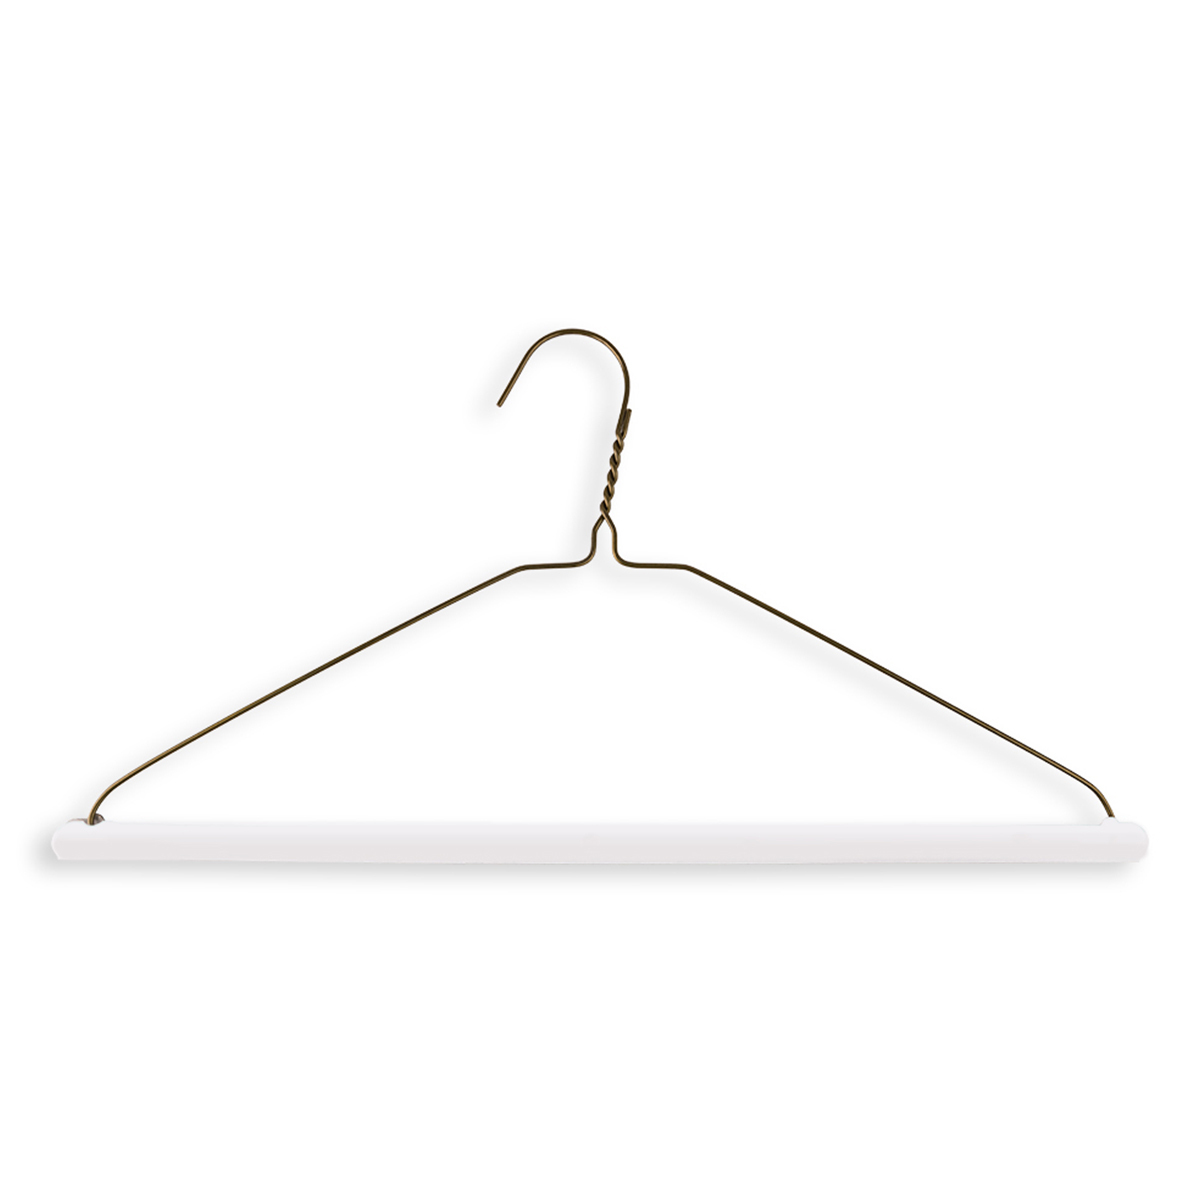 Plastic Suit Hangers - Clear - WAWAK Sewing Supplies